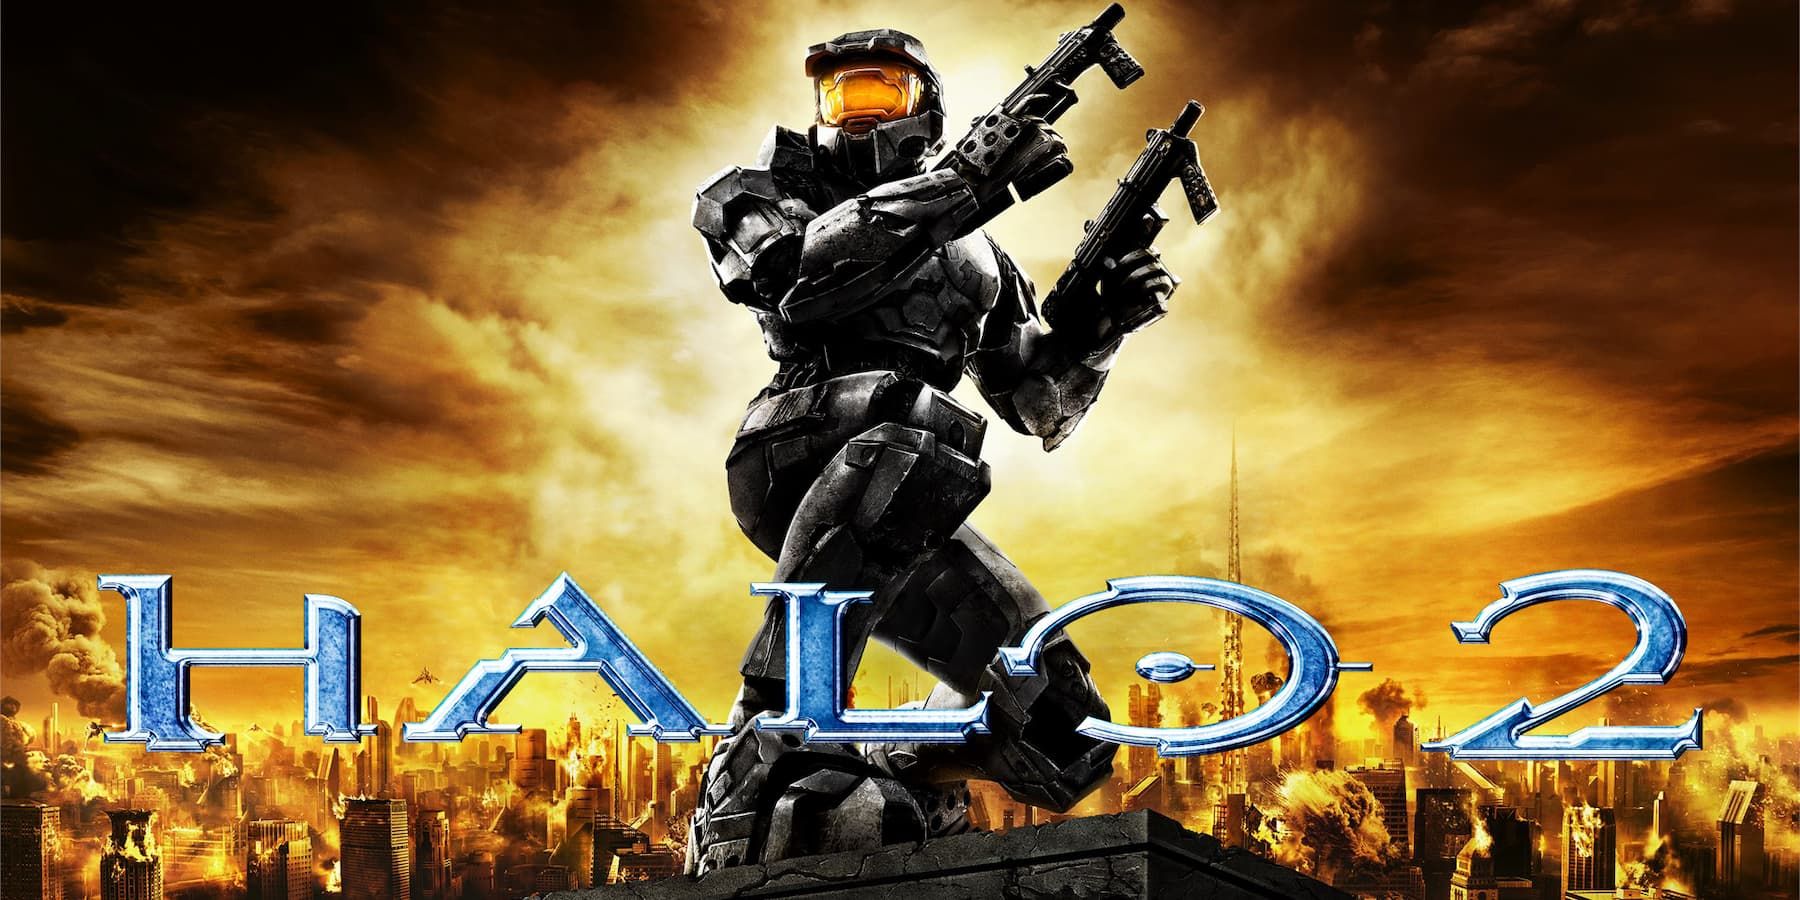 Halo 2 Xbox logo